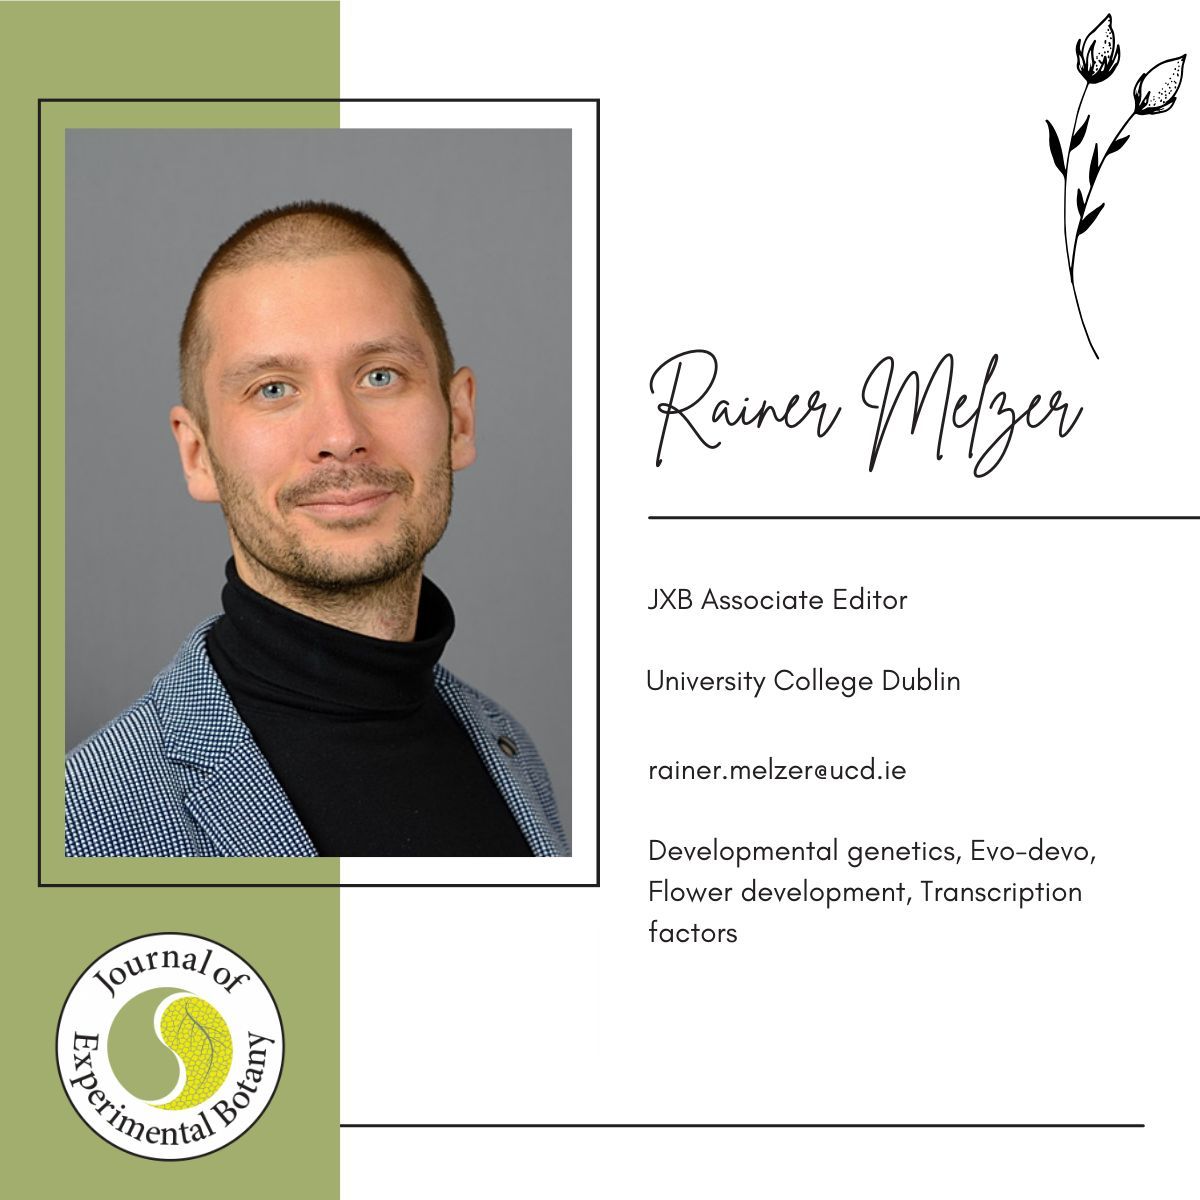 Meet the associate editor, Rainer Melzer, a specialist in developmental #genetics, evolutionary developmental #biology, #flower formation, and transcriptional regulation.